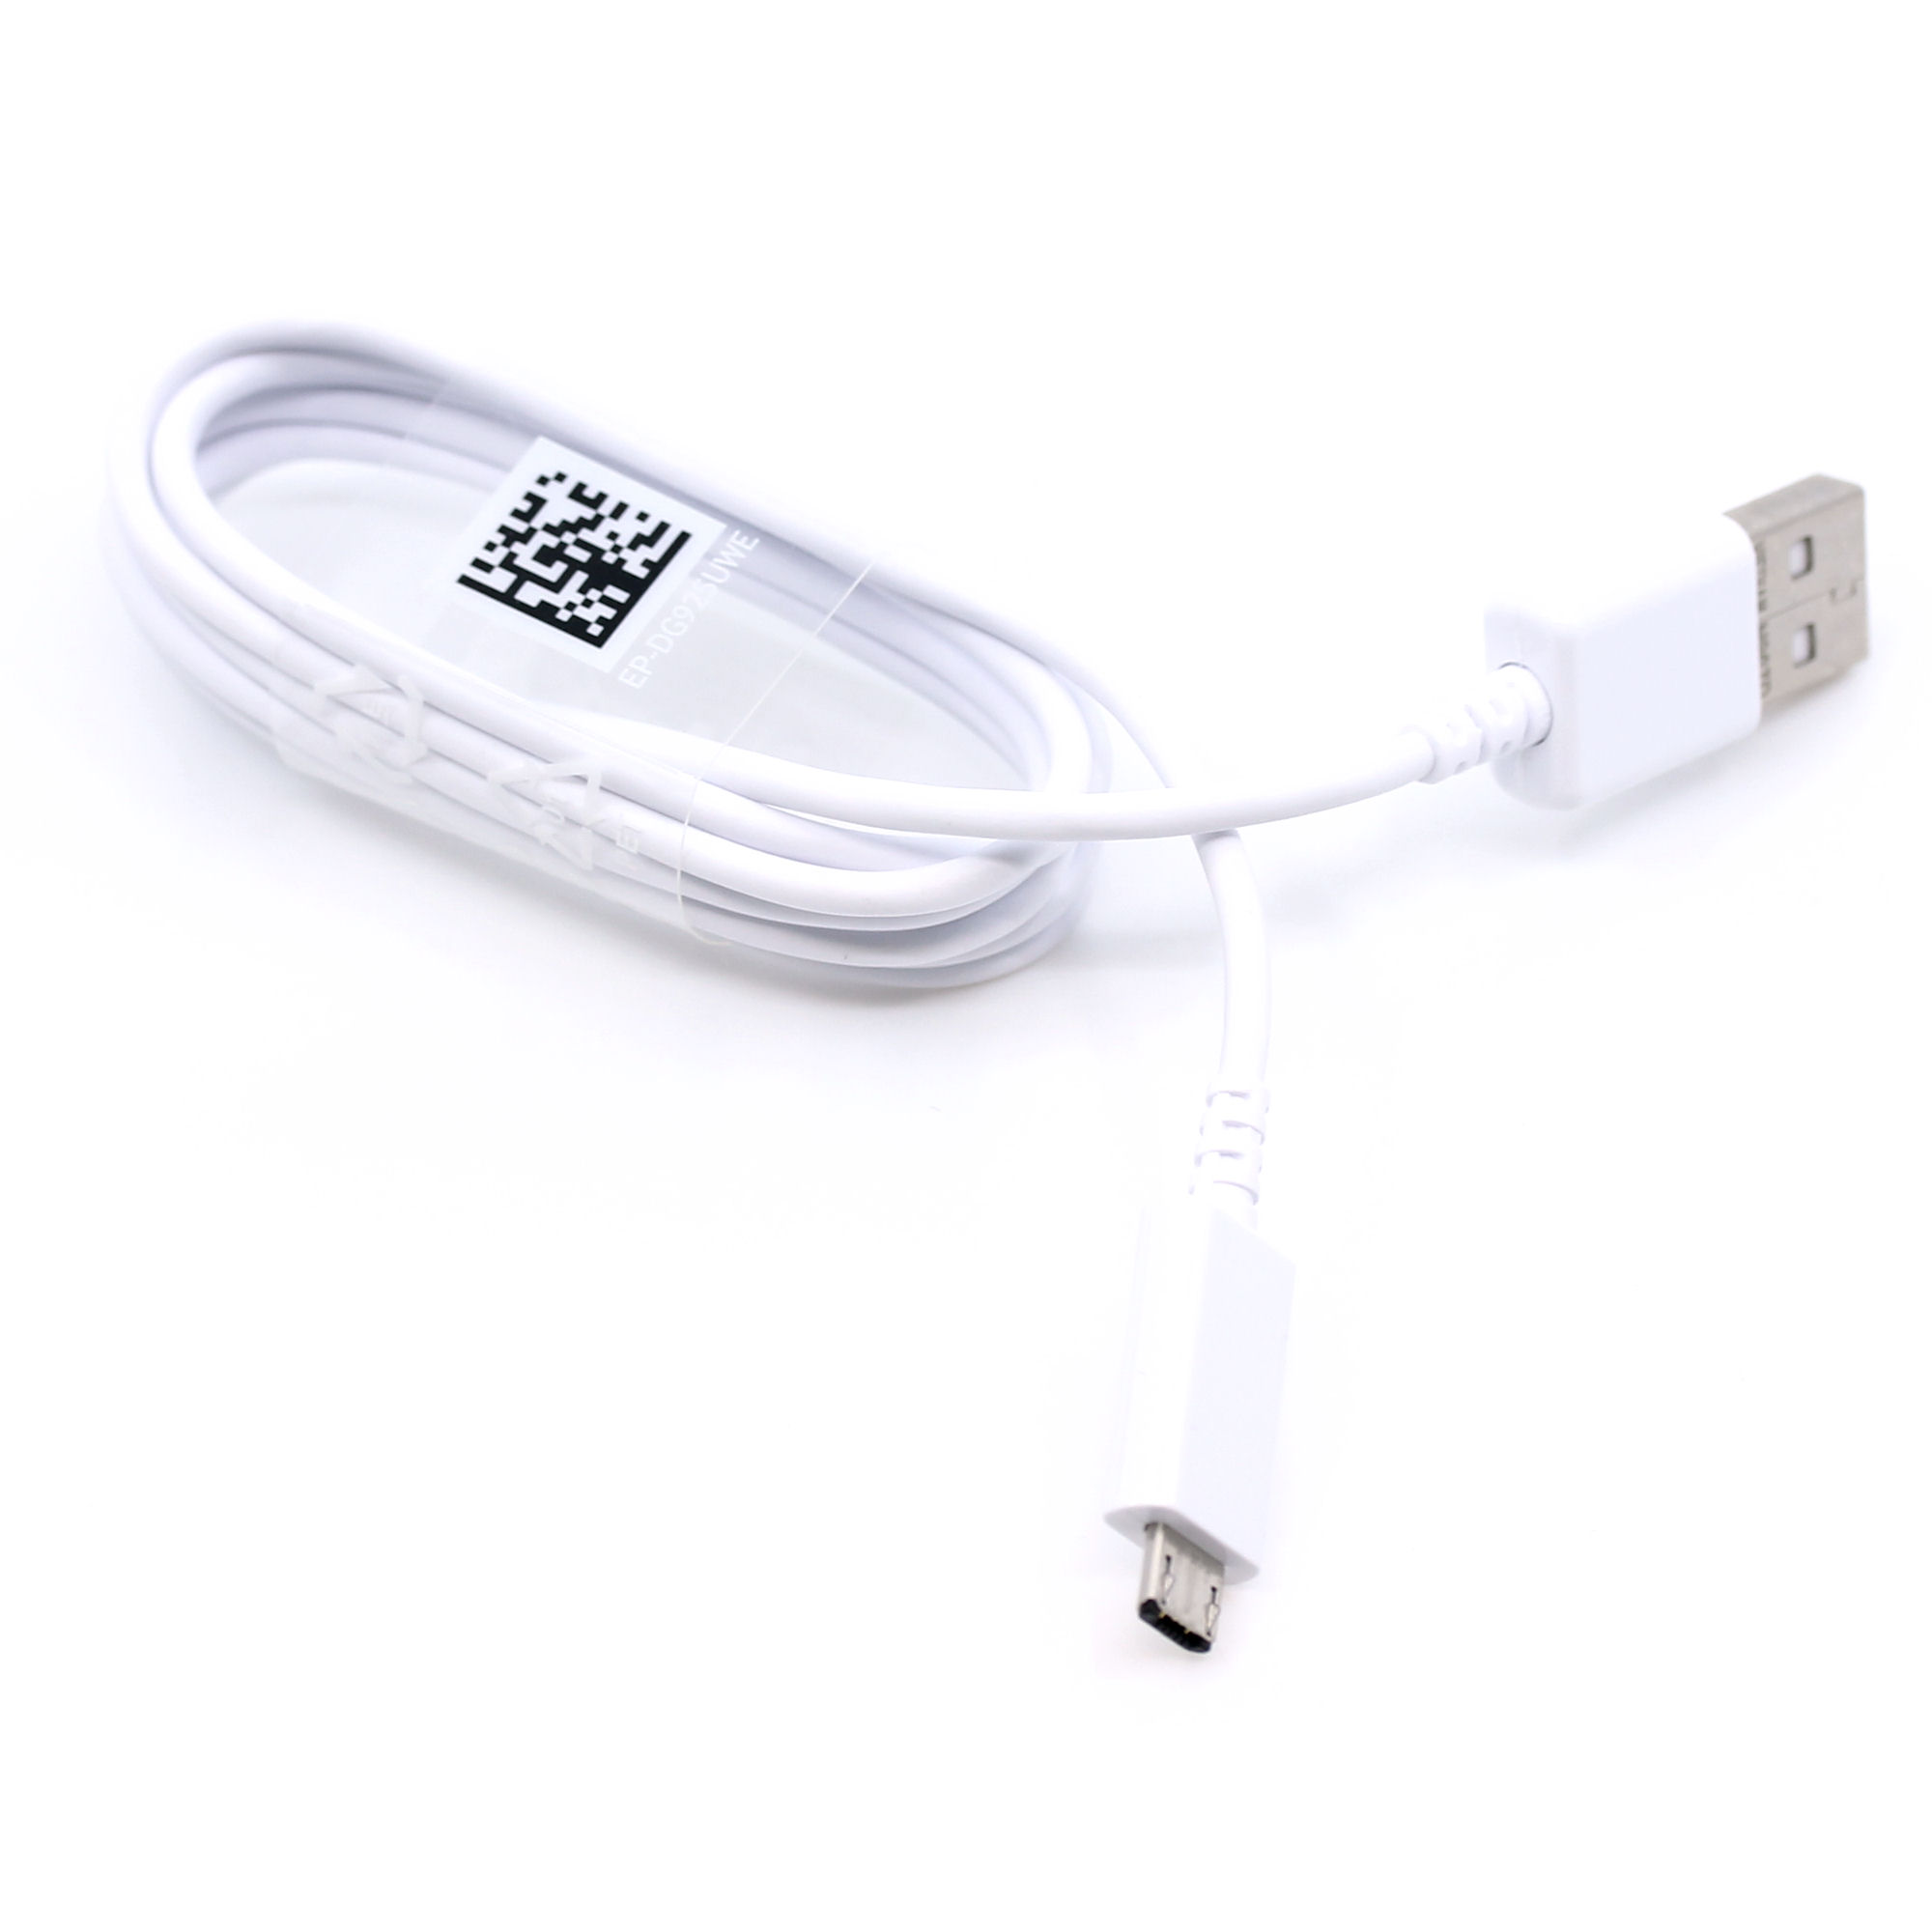 Datenkabel USB Original Samsung EP-DG925UWE white